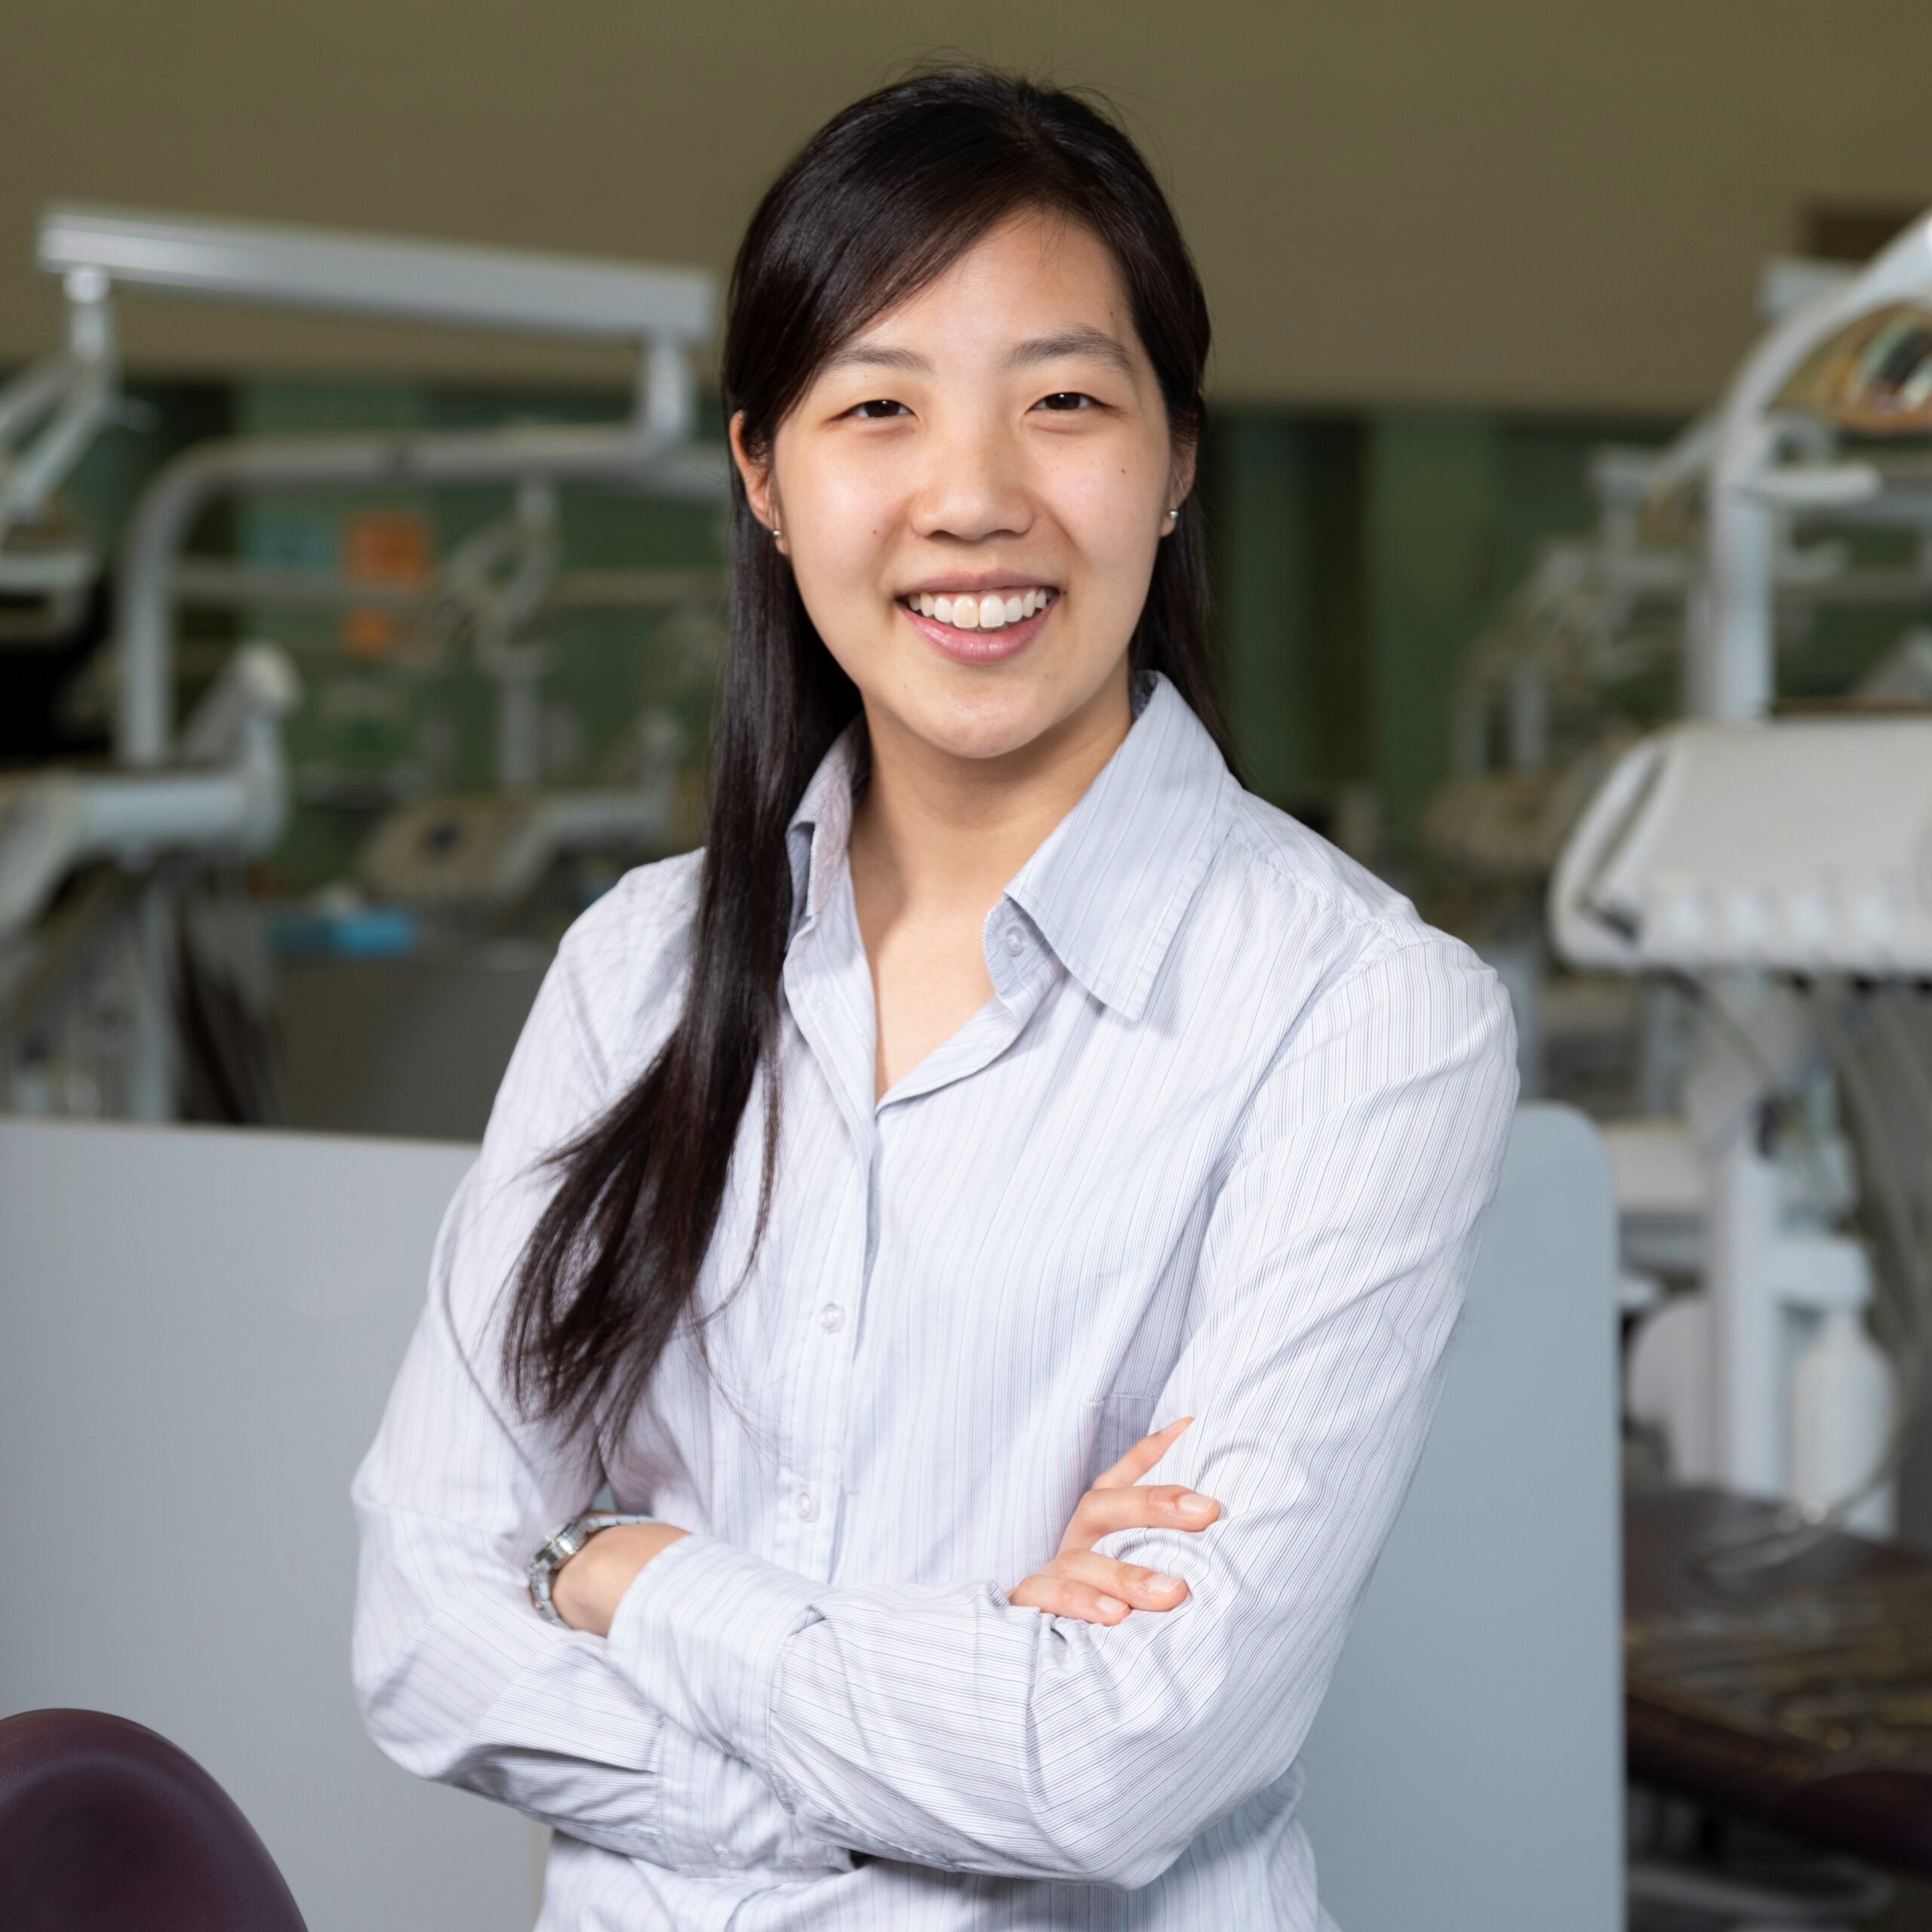 Dr. Sunny Yuen